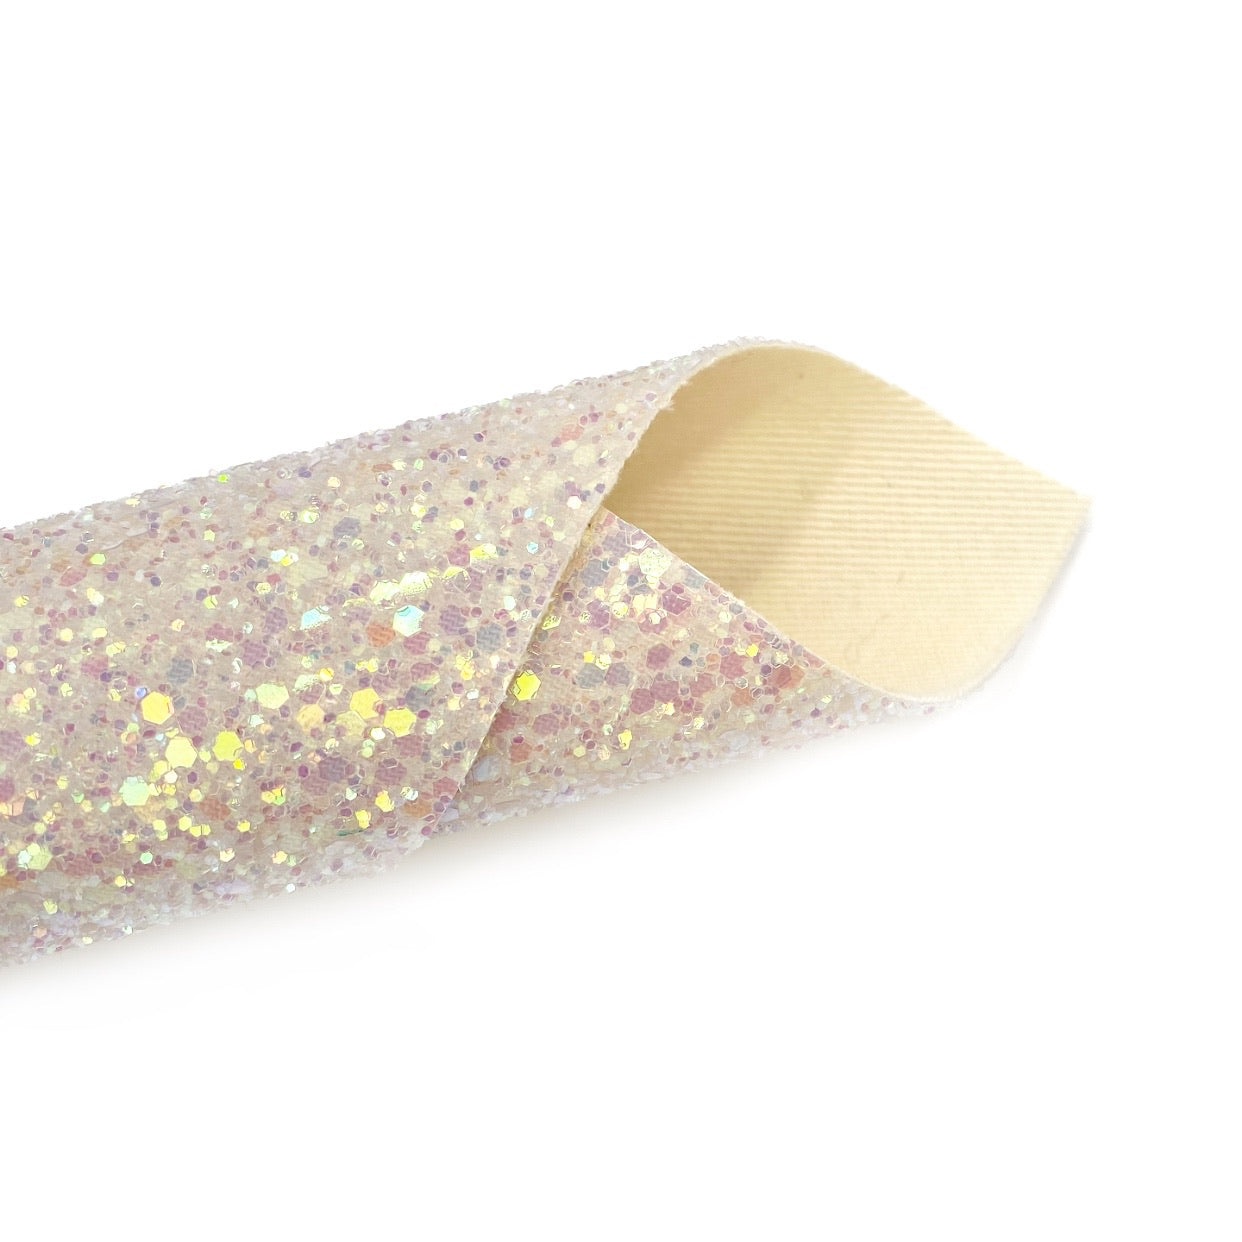 Fairytales Creamy Lux Premium Chunky Glitter Fabric